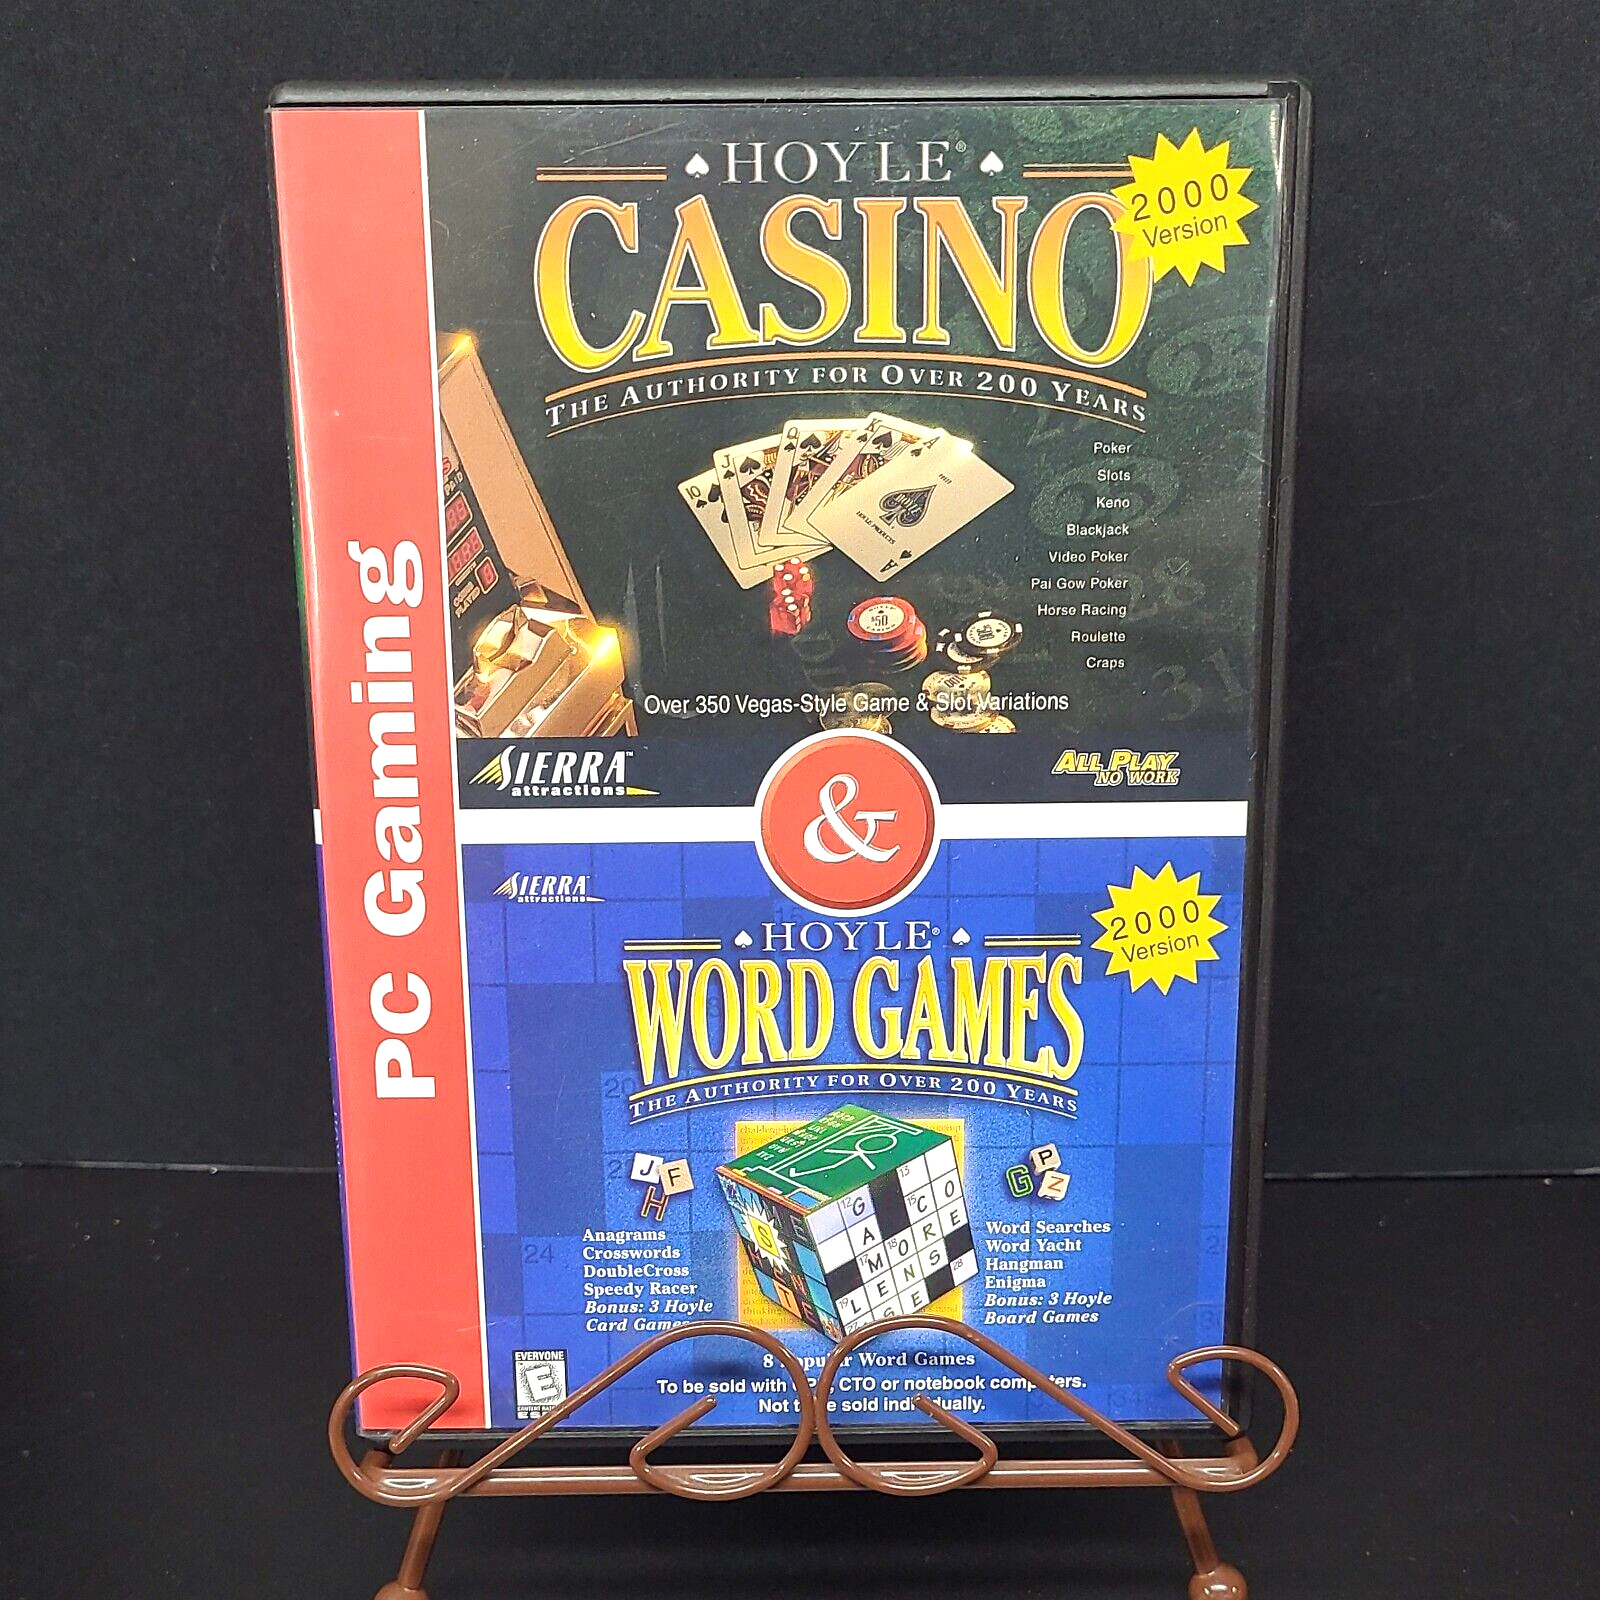 Hoyle Casino 2000 Version / Hoyle Word Games 2000 Version PC 2 Games CD ROM